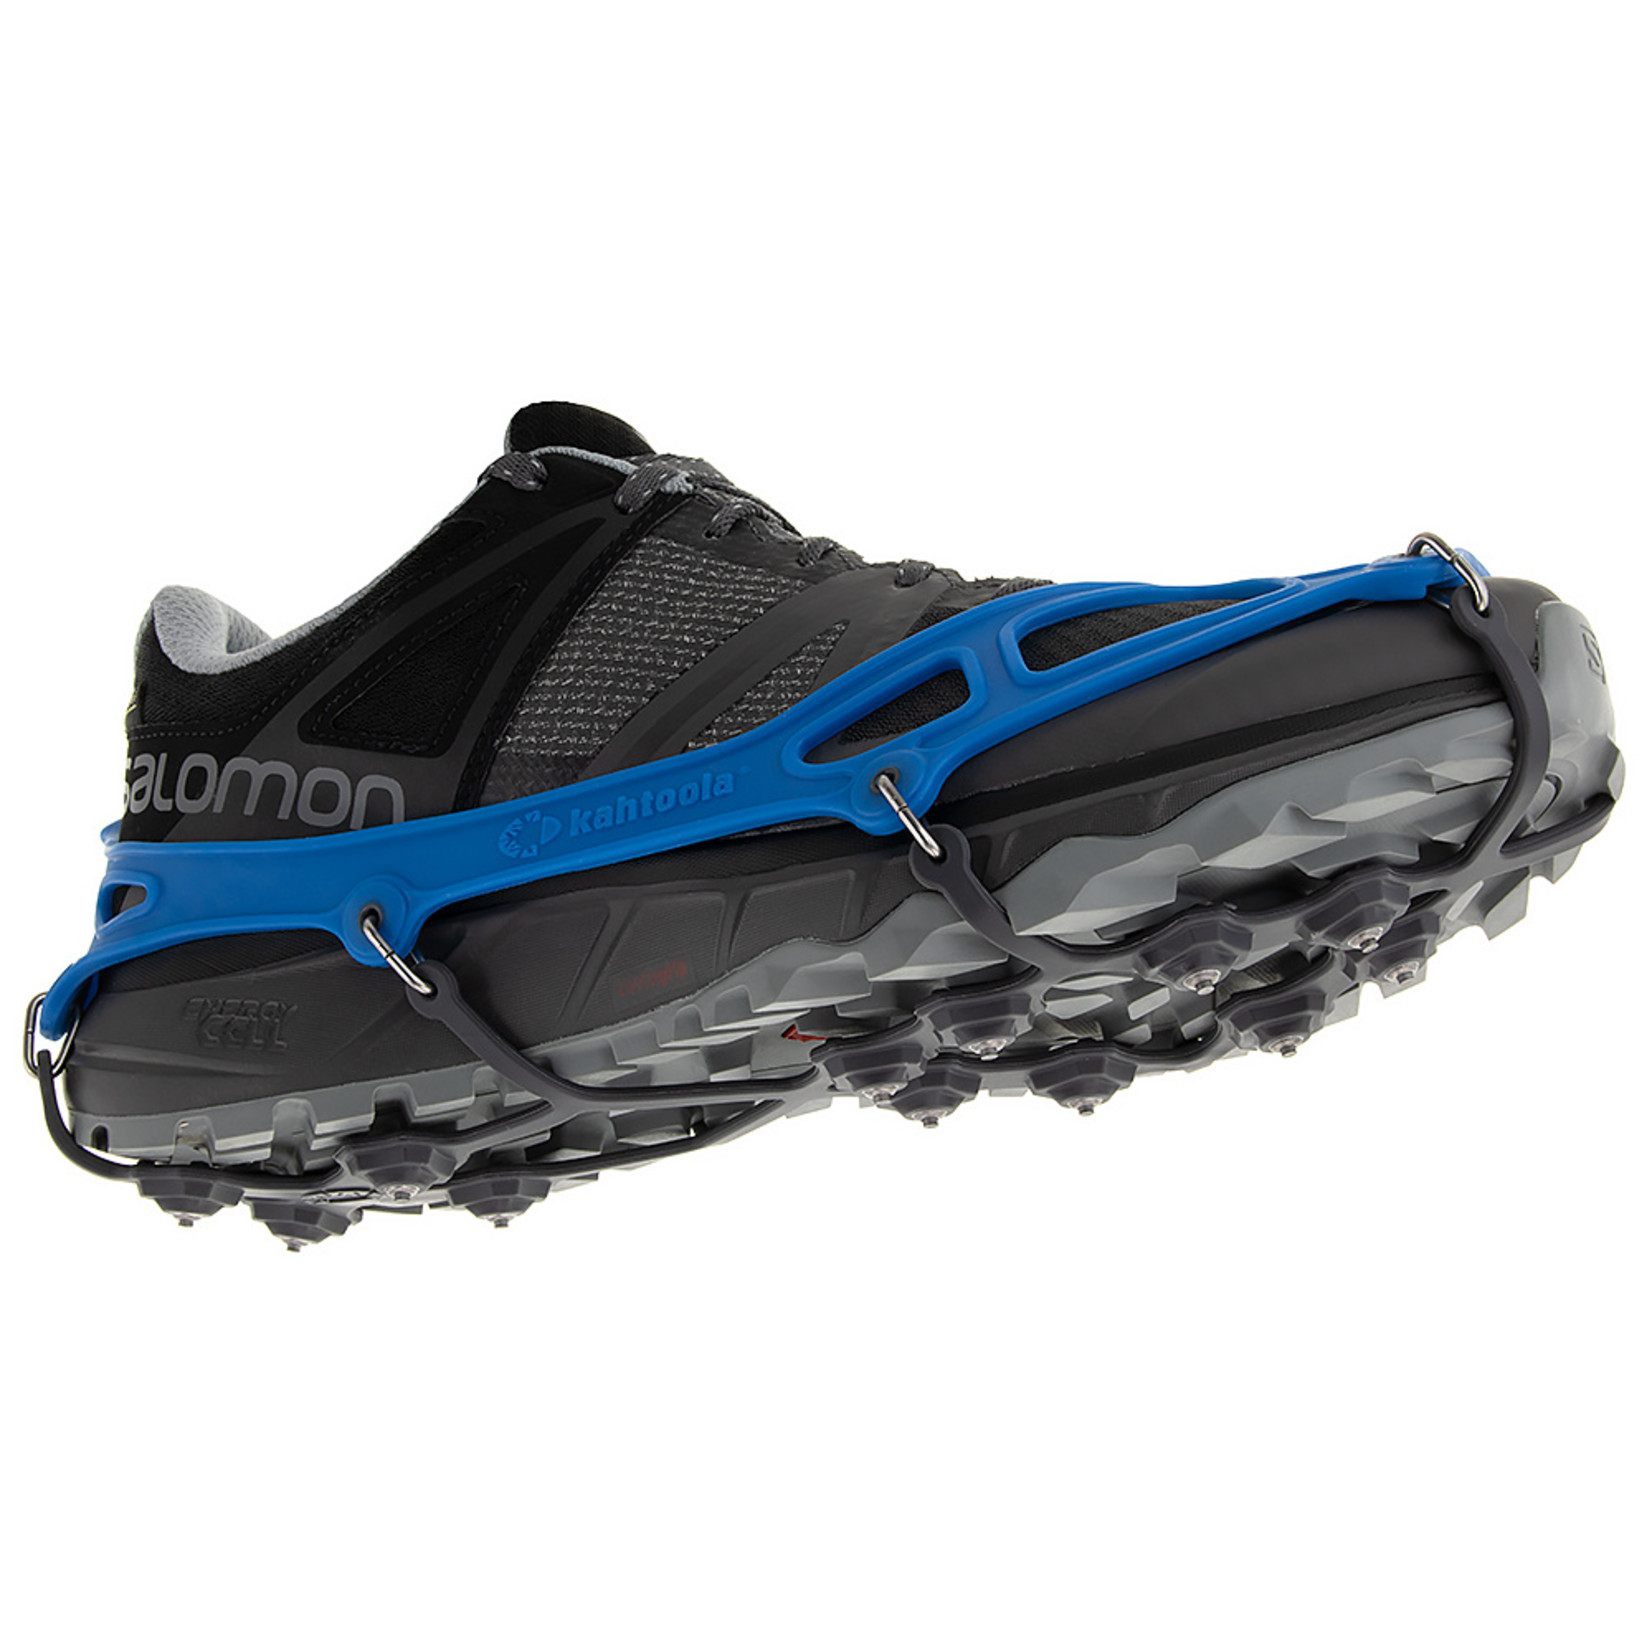 Kathoola EXOspikes™ Footwear Traction